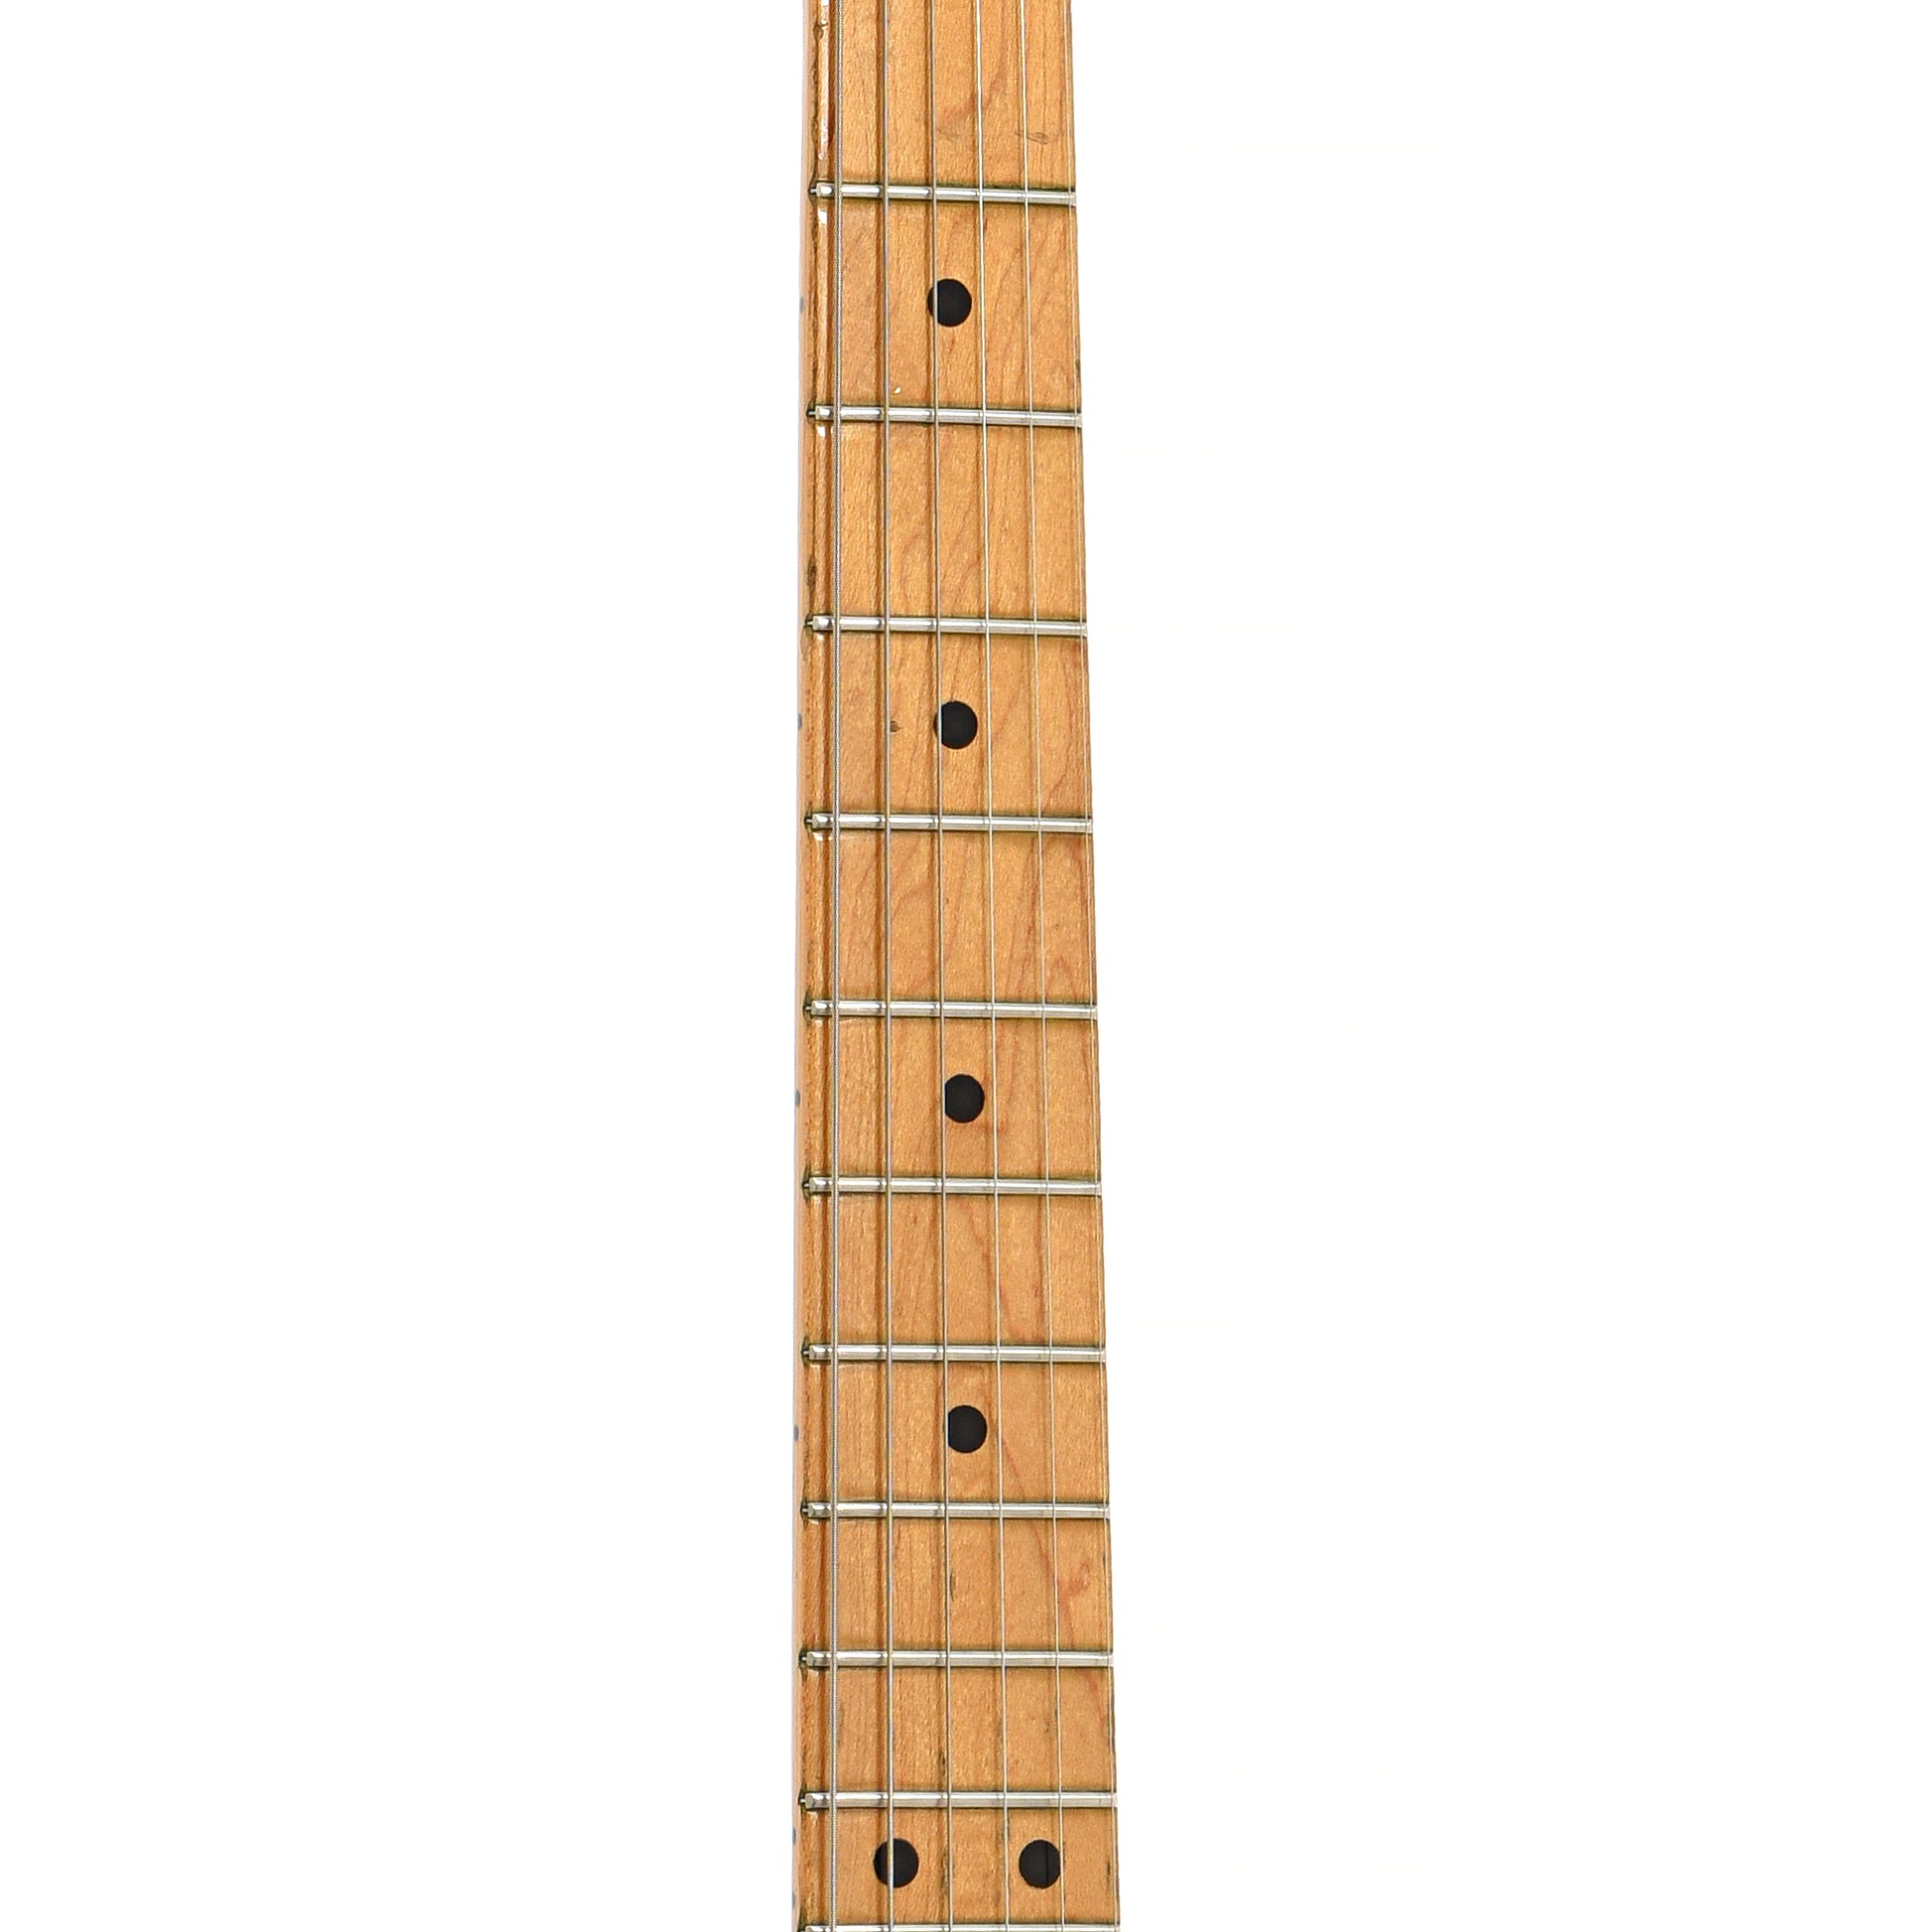 Fretboard of Fender Stratocaster Electric Guitar